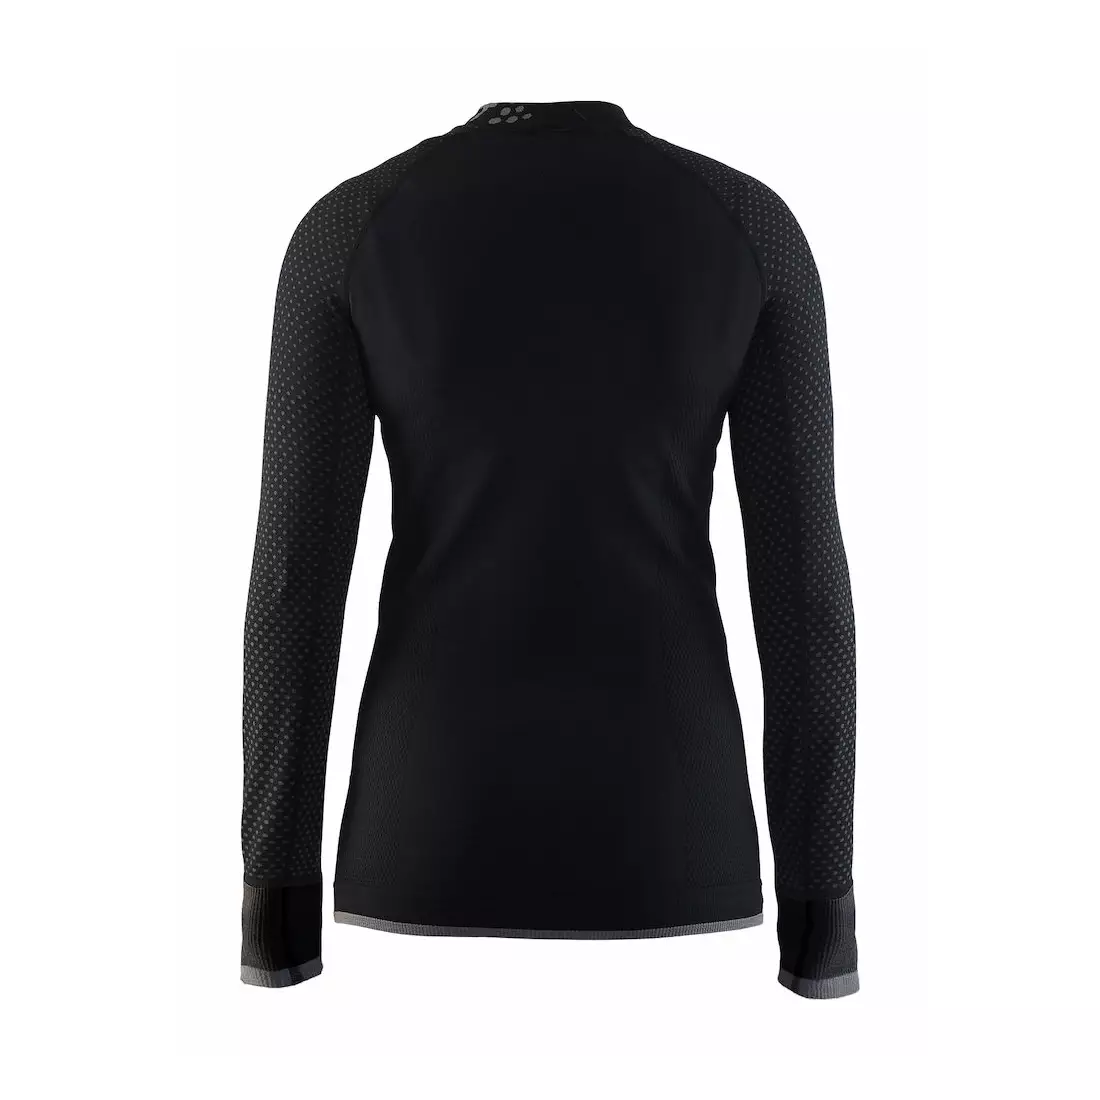 Dámska spodná bielizeň CRAFT WARM INTENSITY, čierne tričko, 1905347-999985